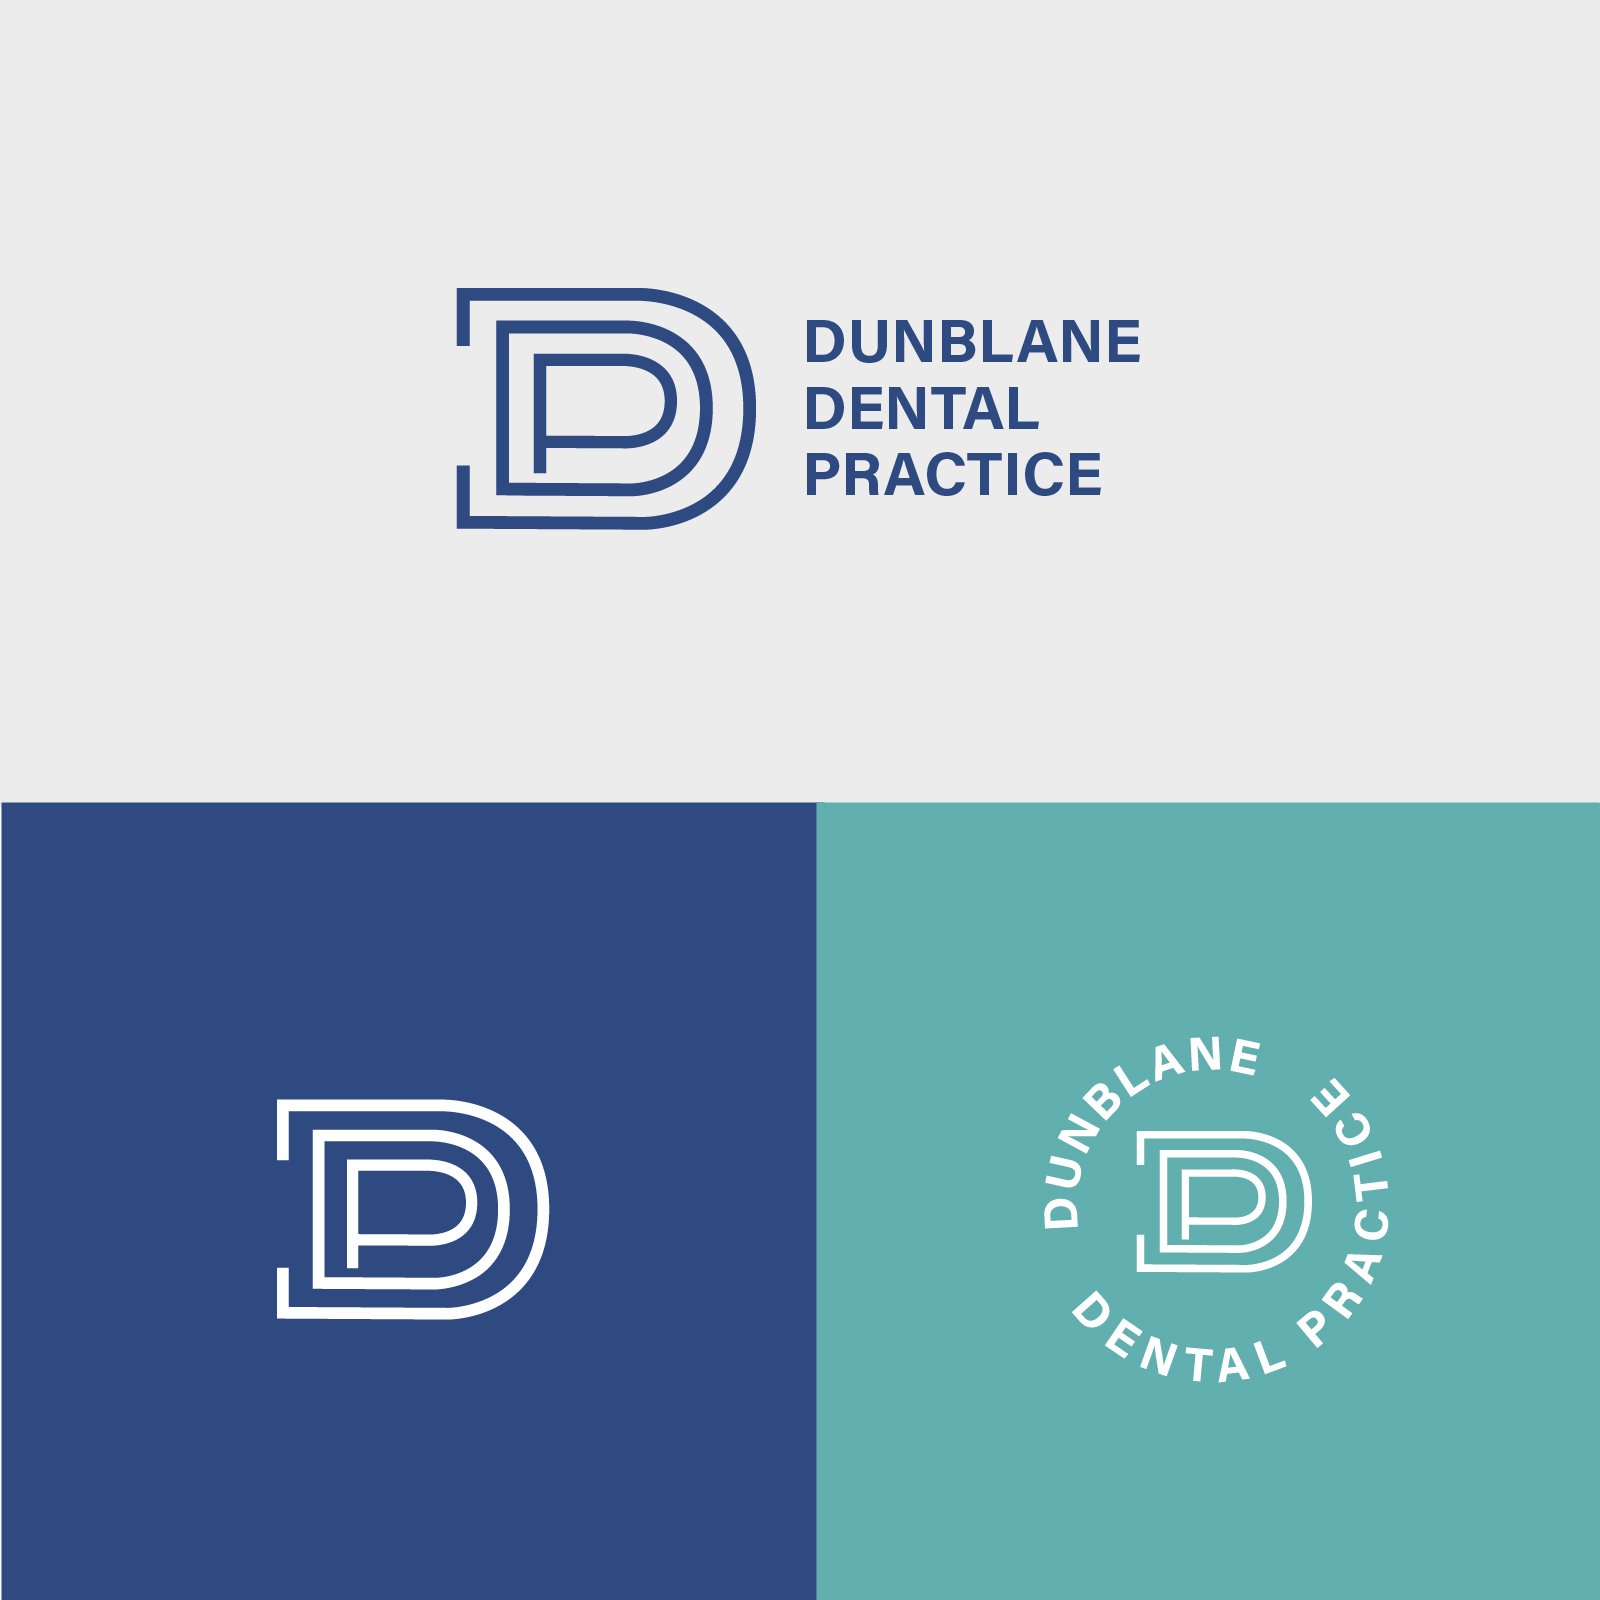 Dunblane Dental Practice_5.jpg